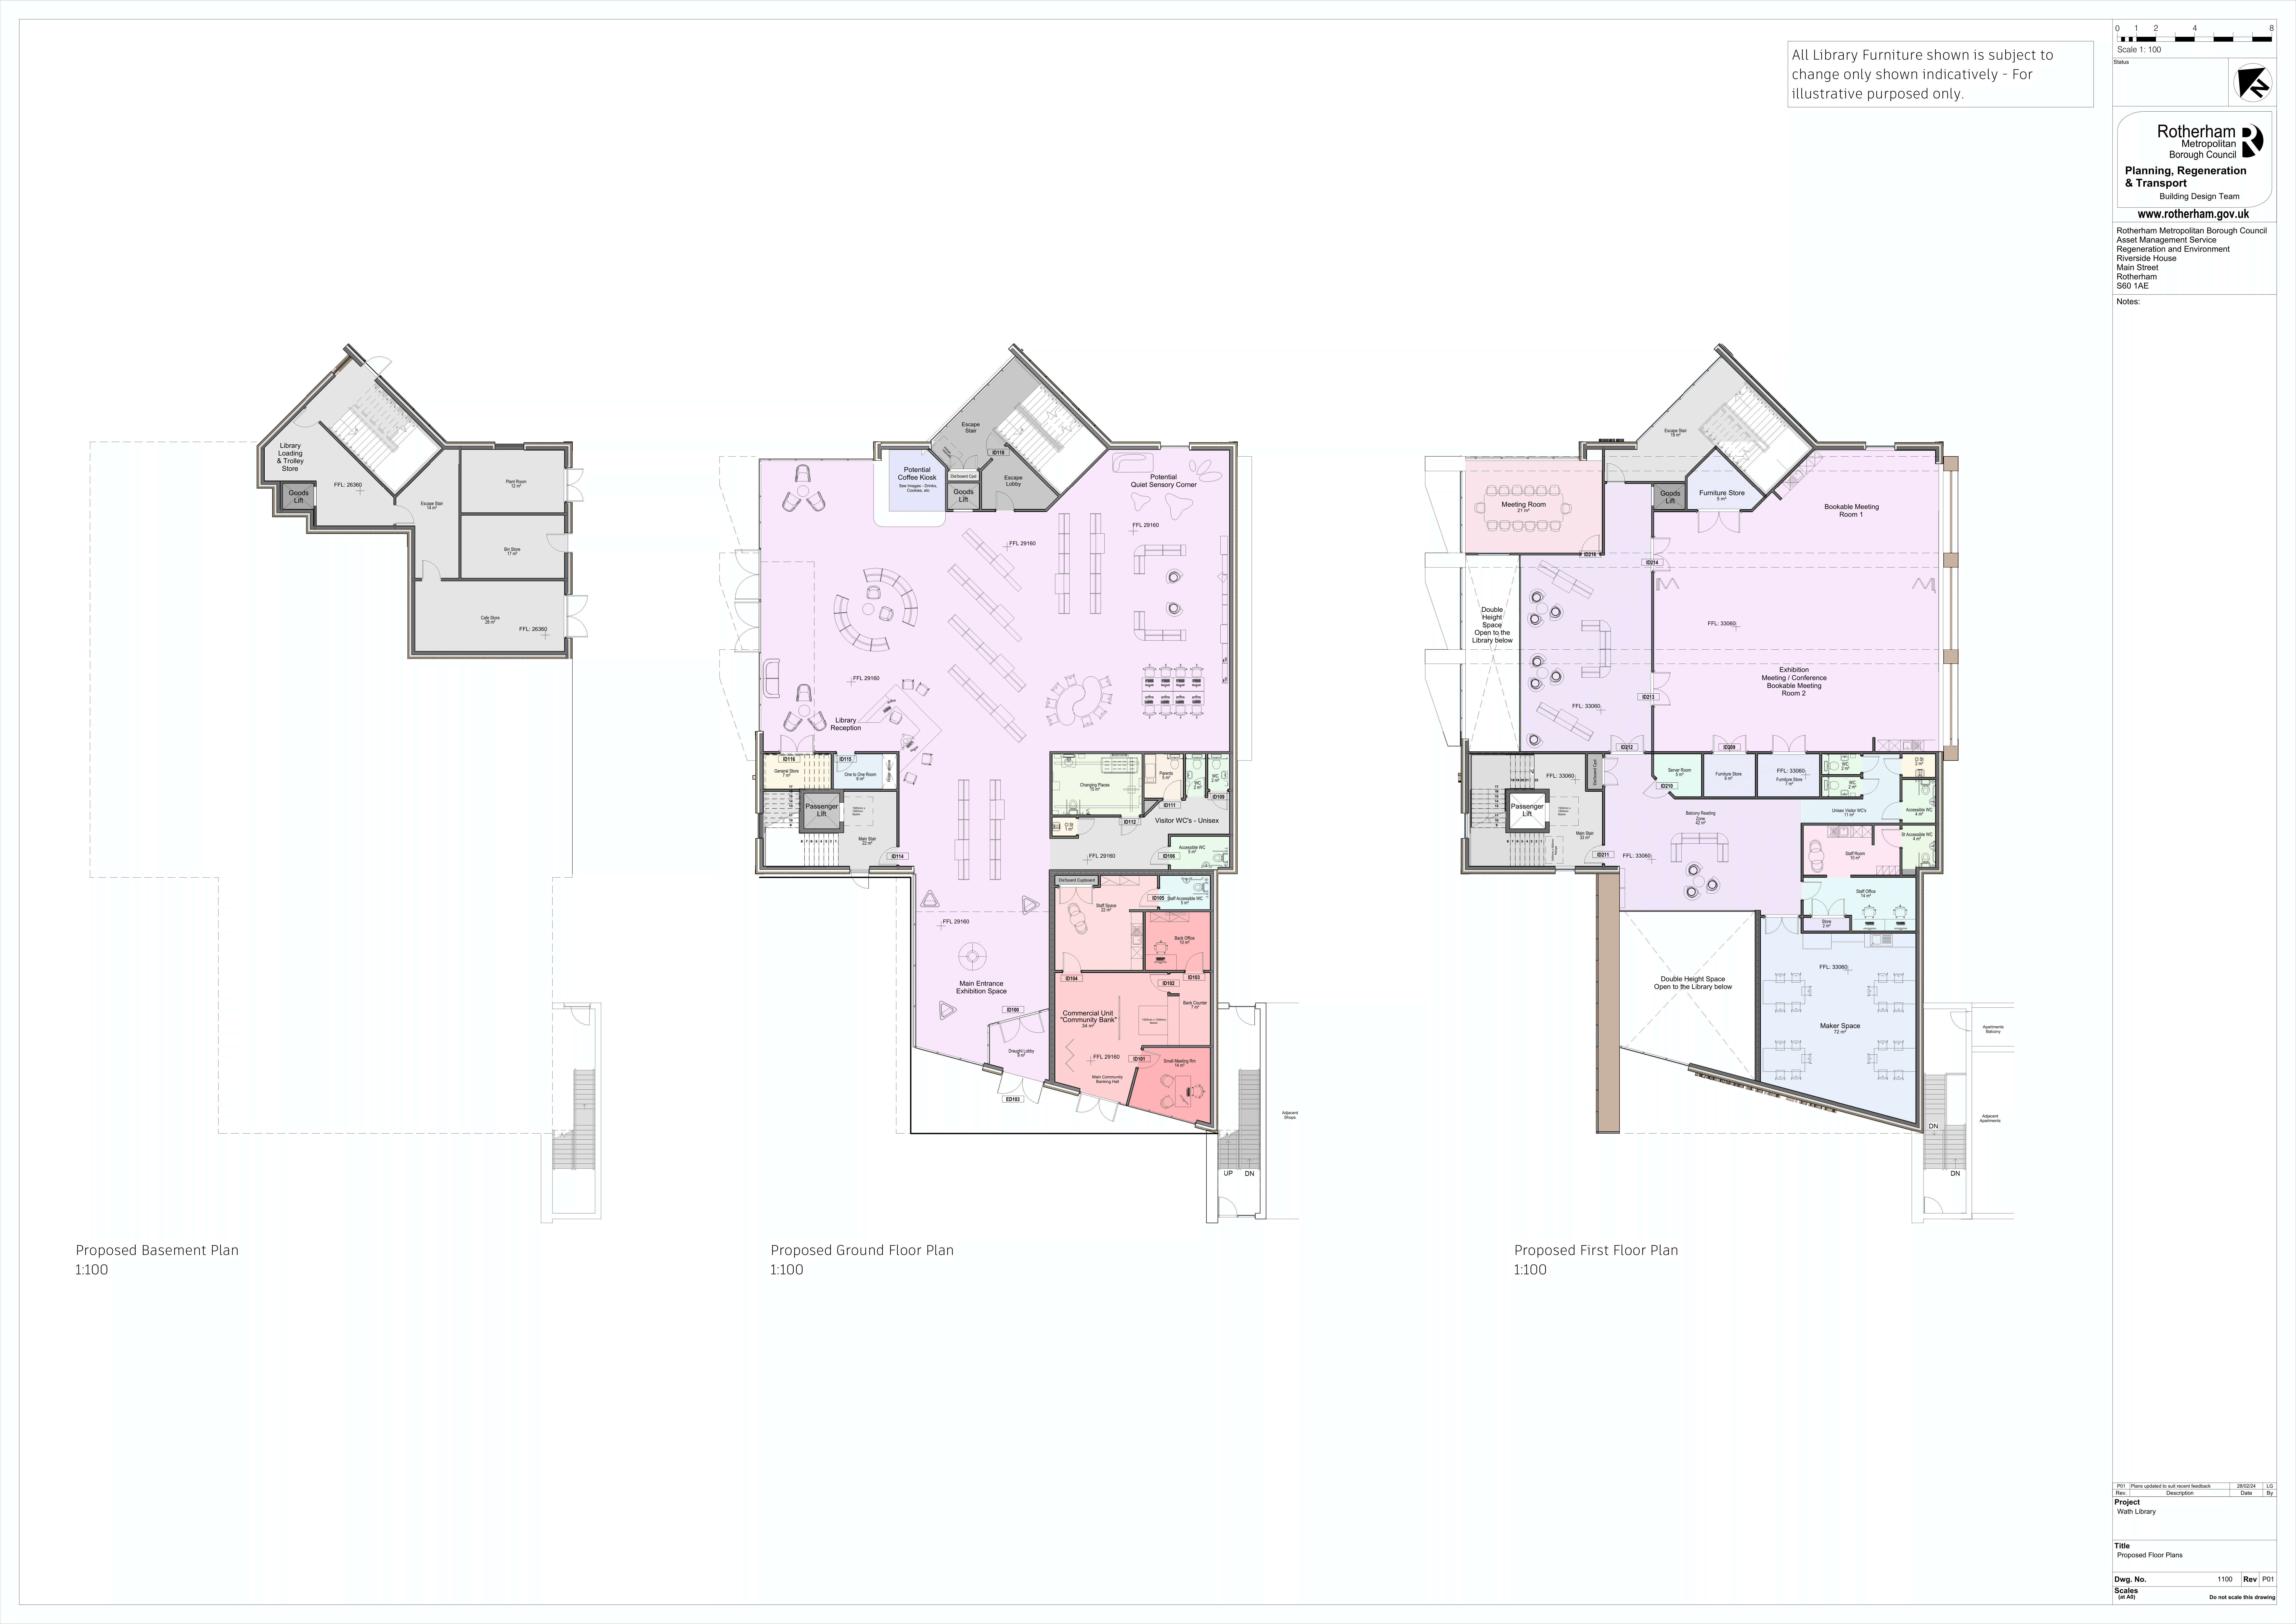 Wath library proposed floor plans